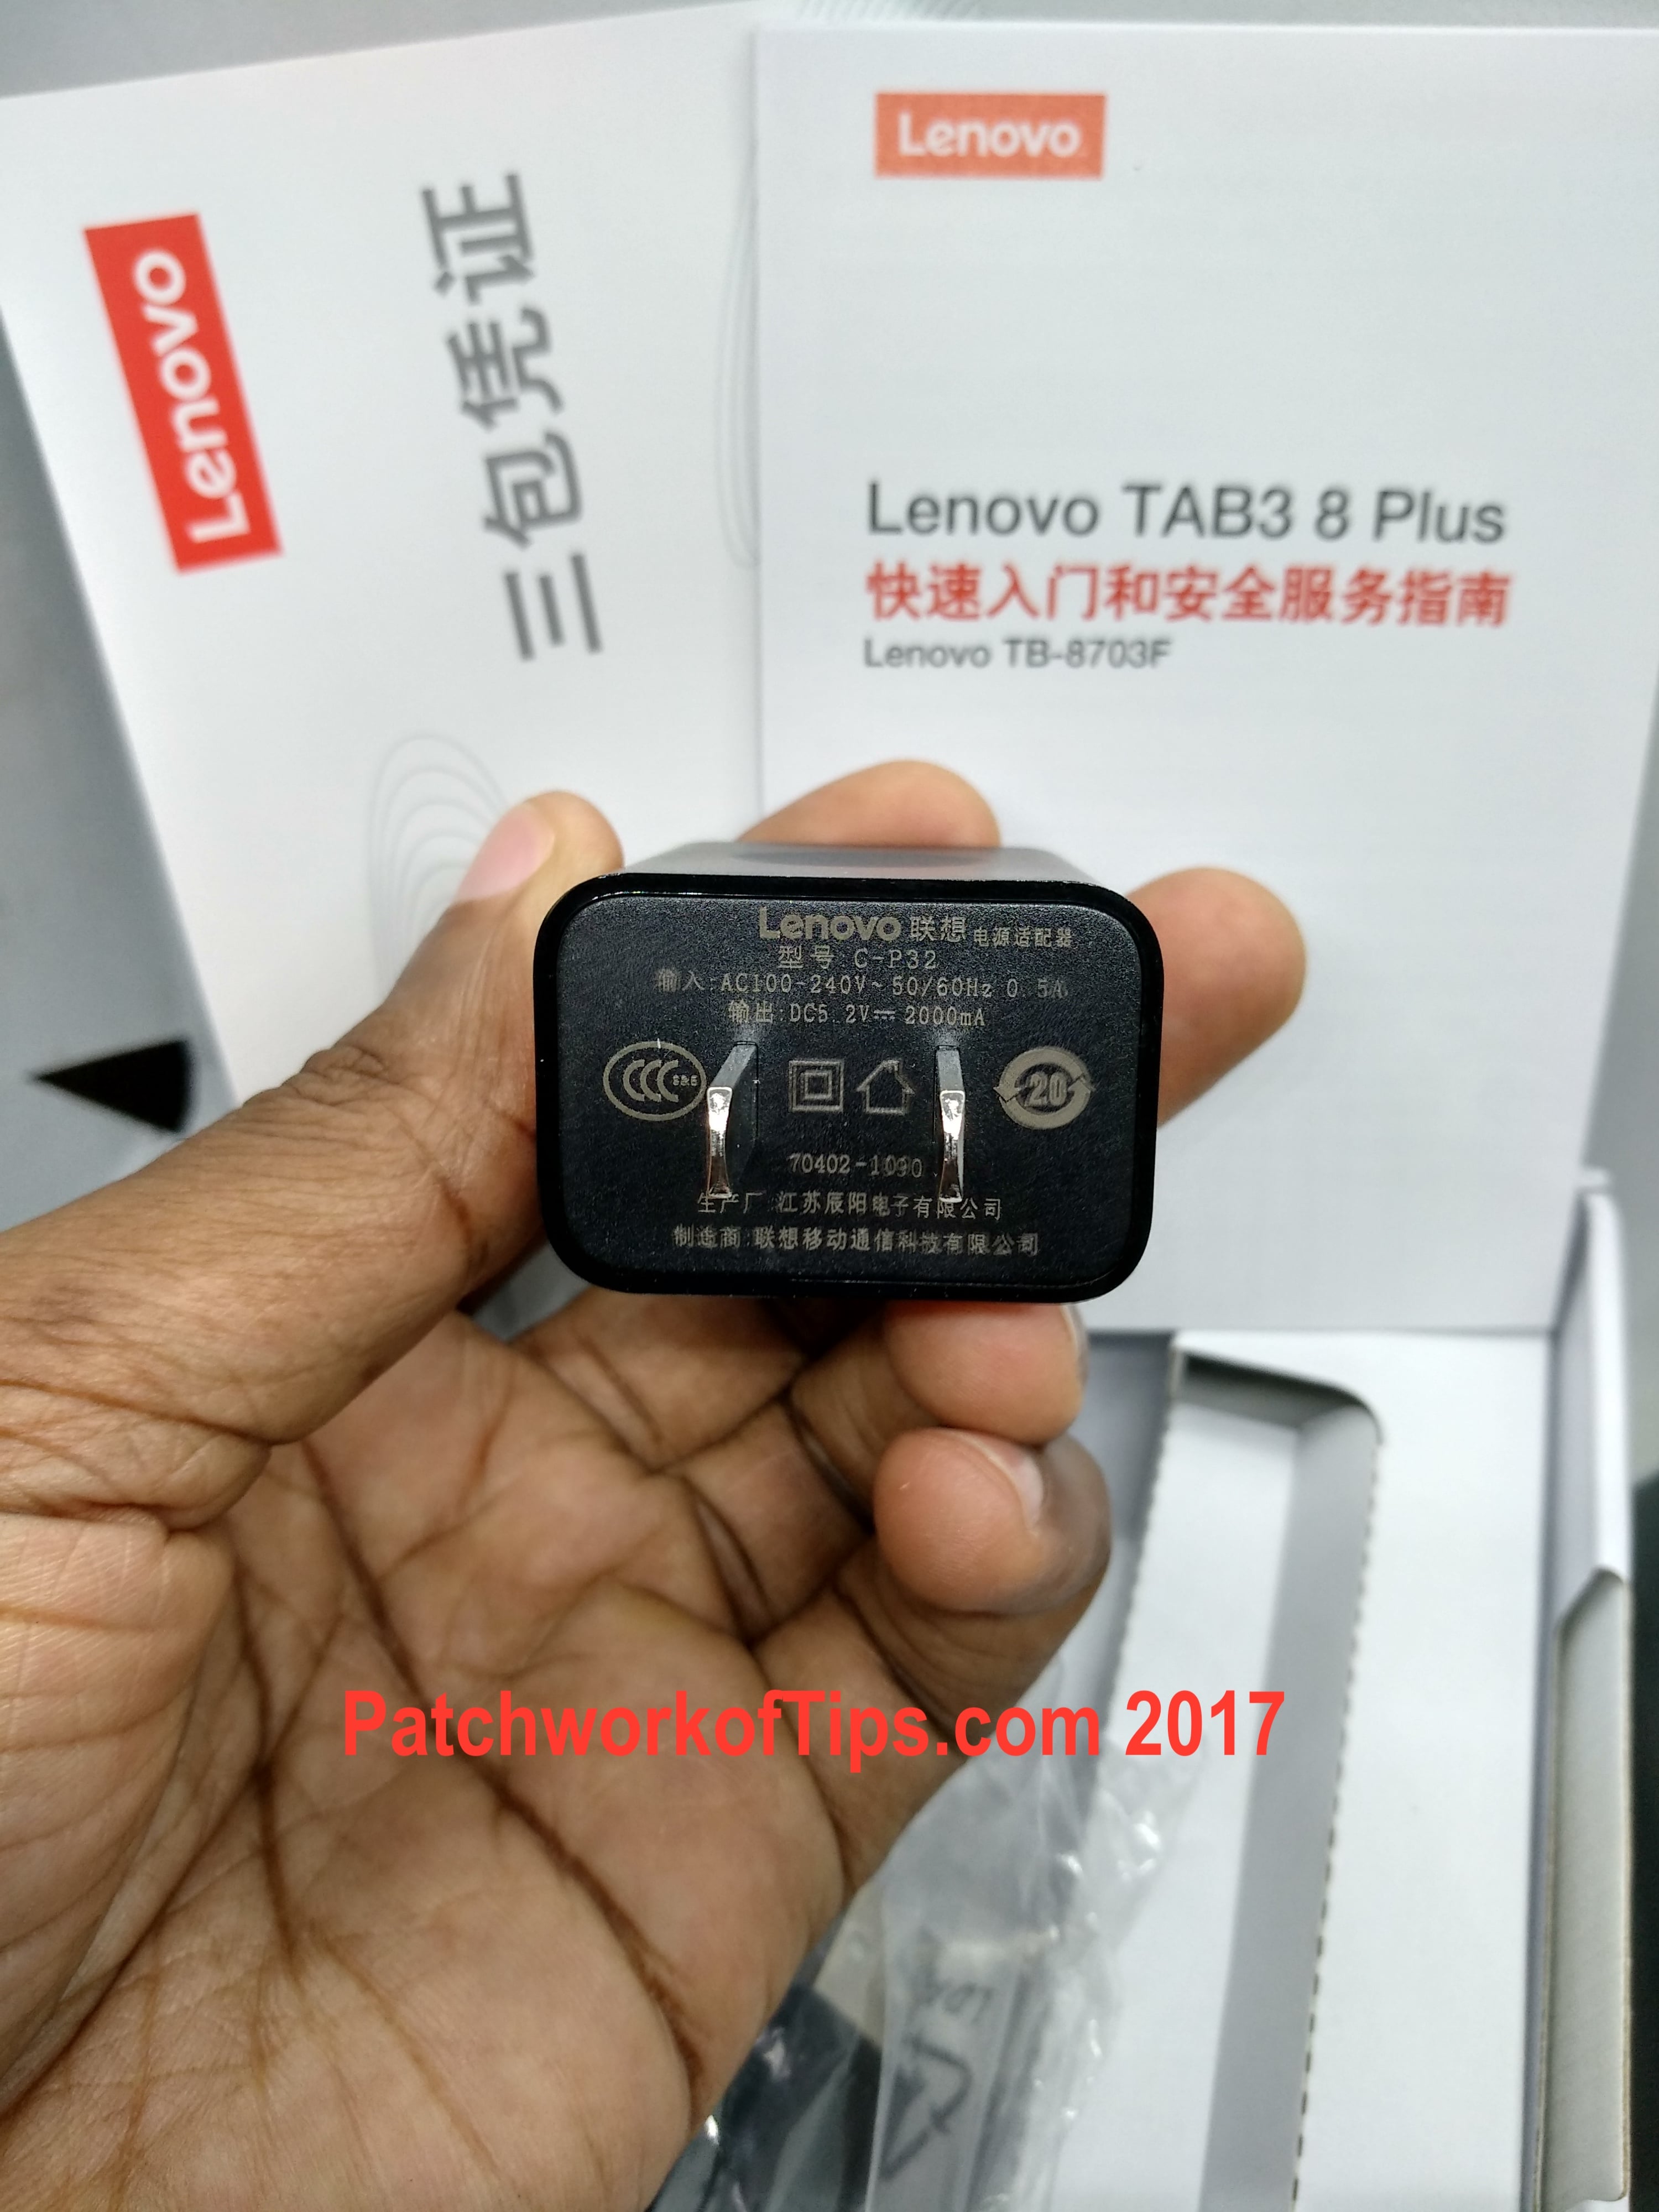 Lenovo TAB3 8 Plus 5V:2A Wall Adapter